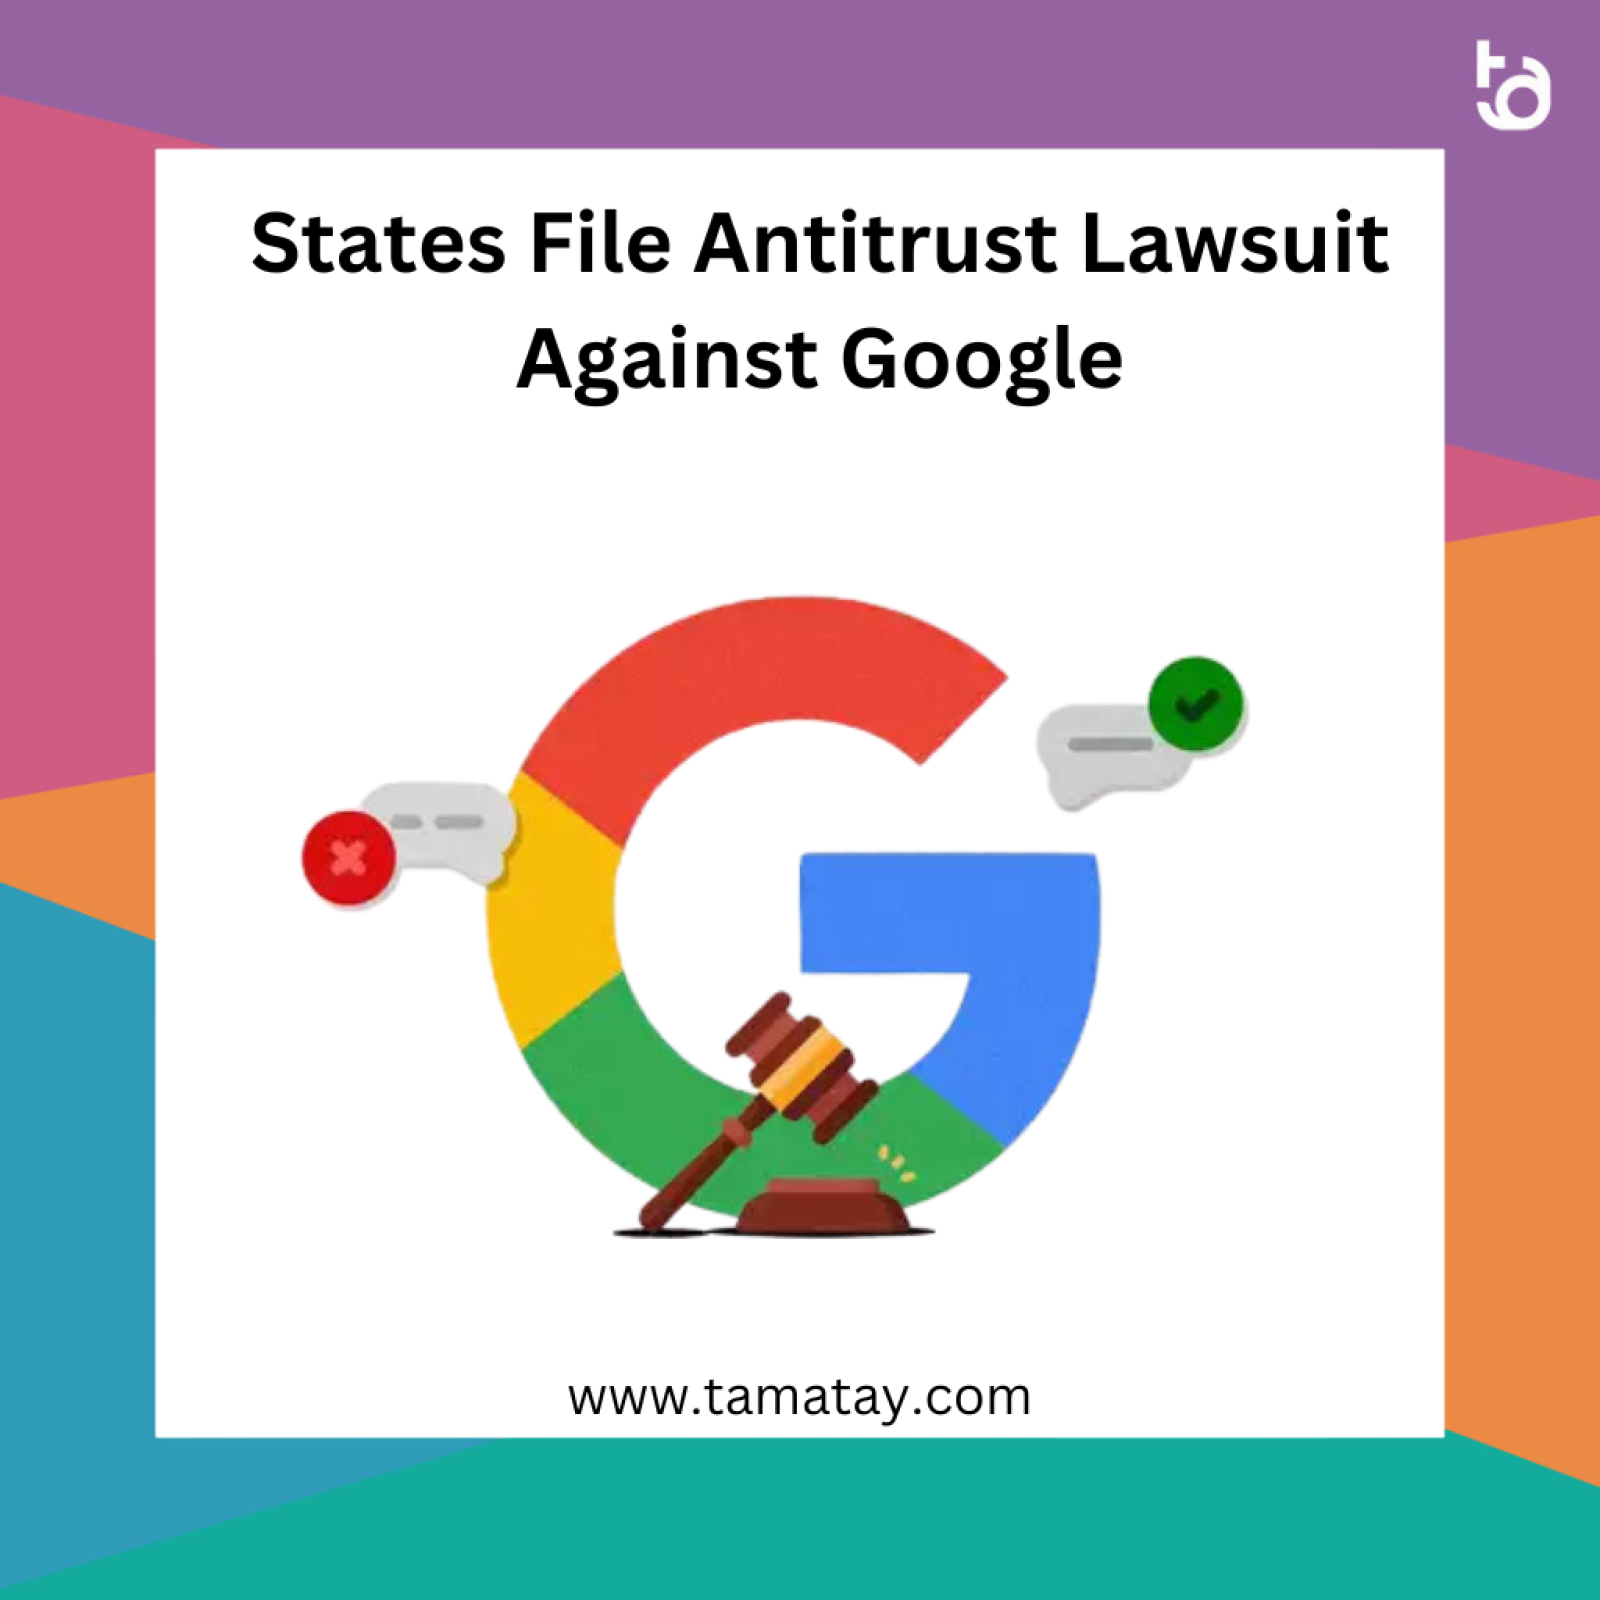 States File Antitrust Lawsuit Against Google